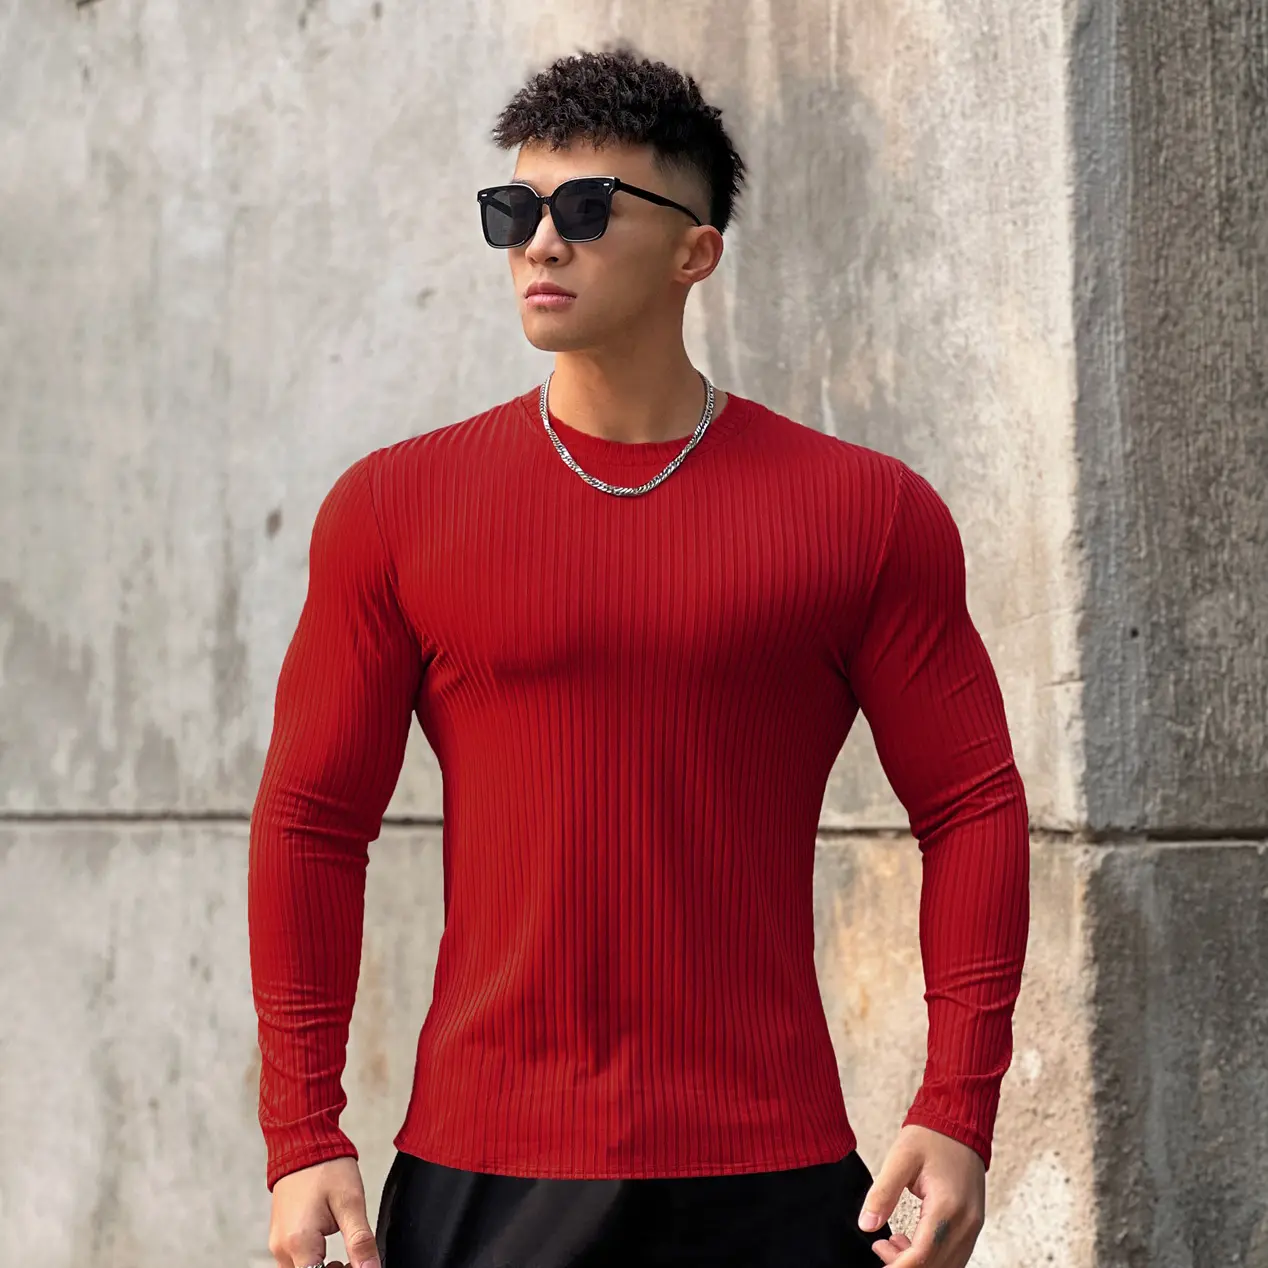 High Quality Smooth Plain Coloured Crew Neck Gym Sweatshirt T Shirt For Men Long Sleeve